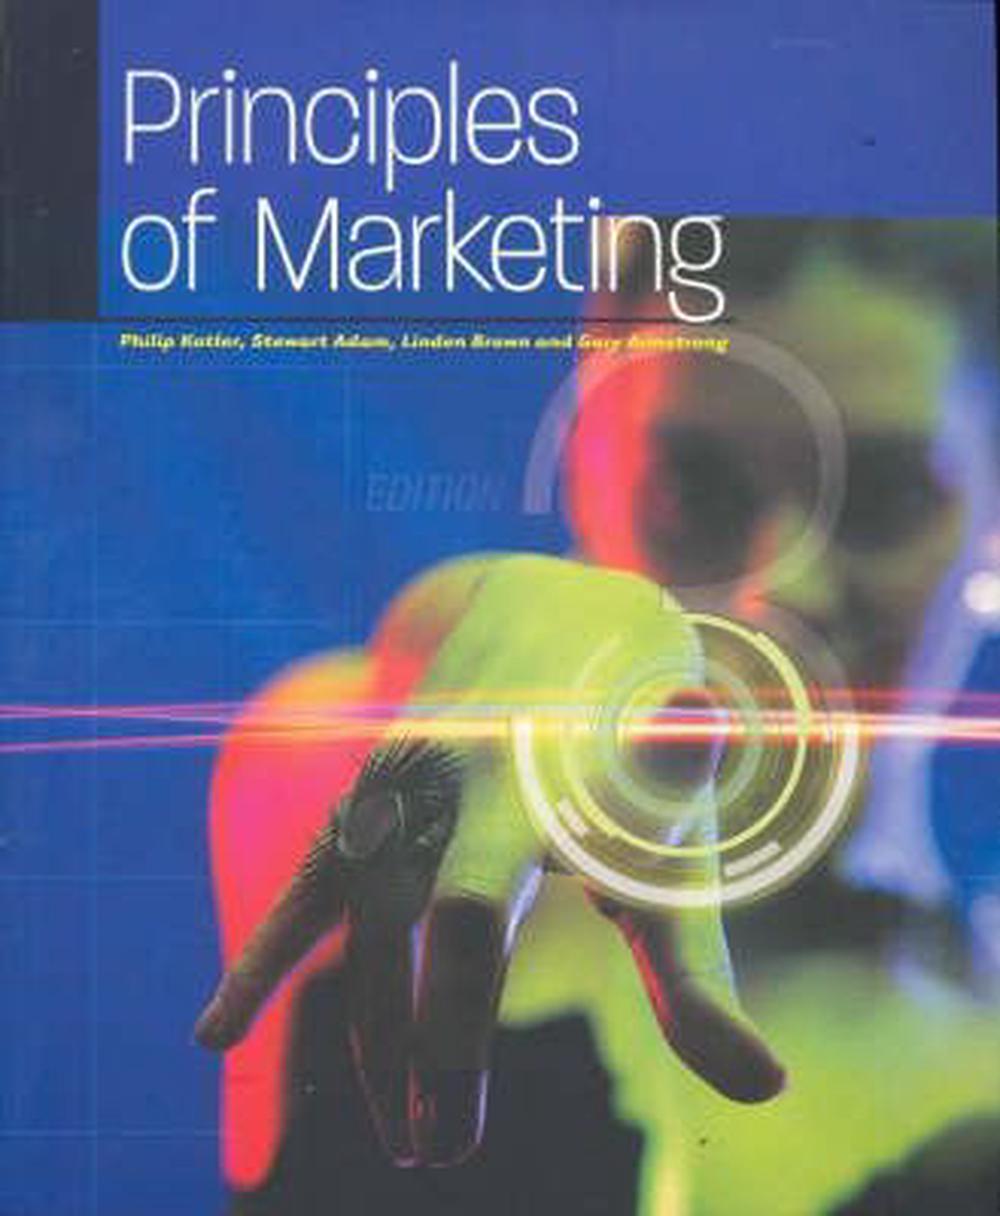 philip kotler principles of marketing